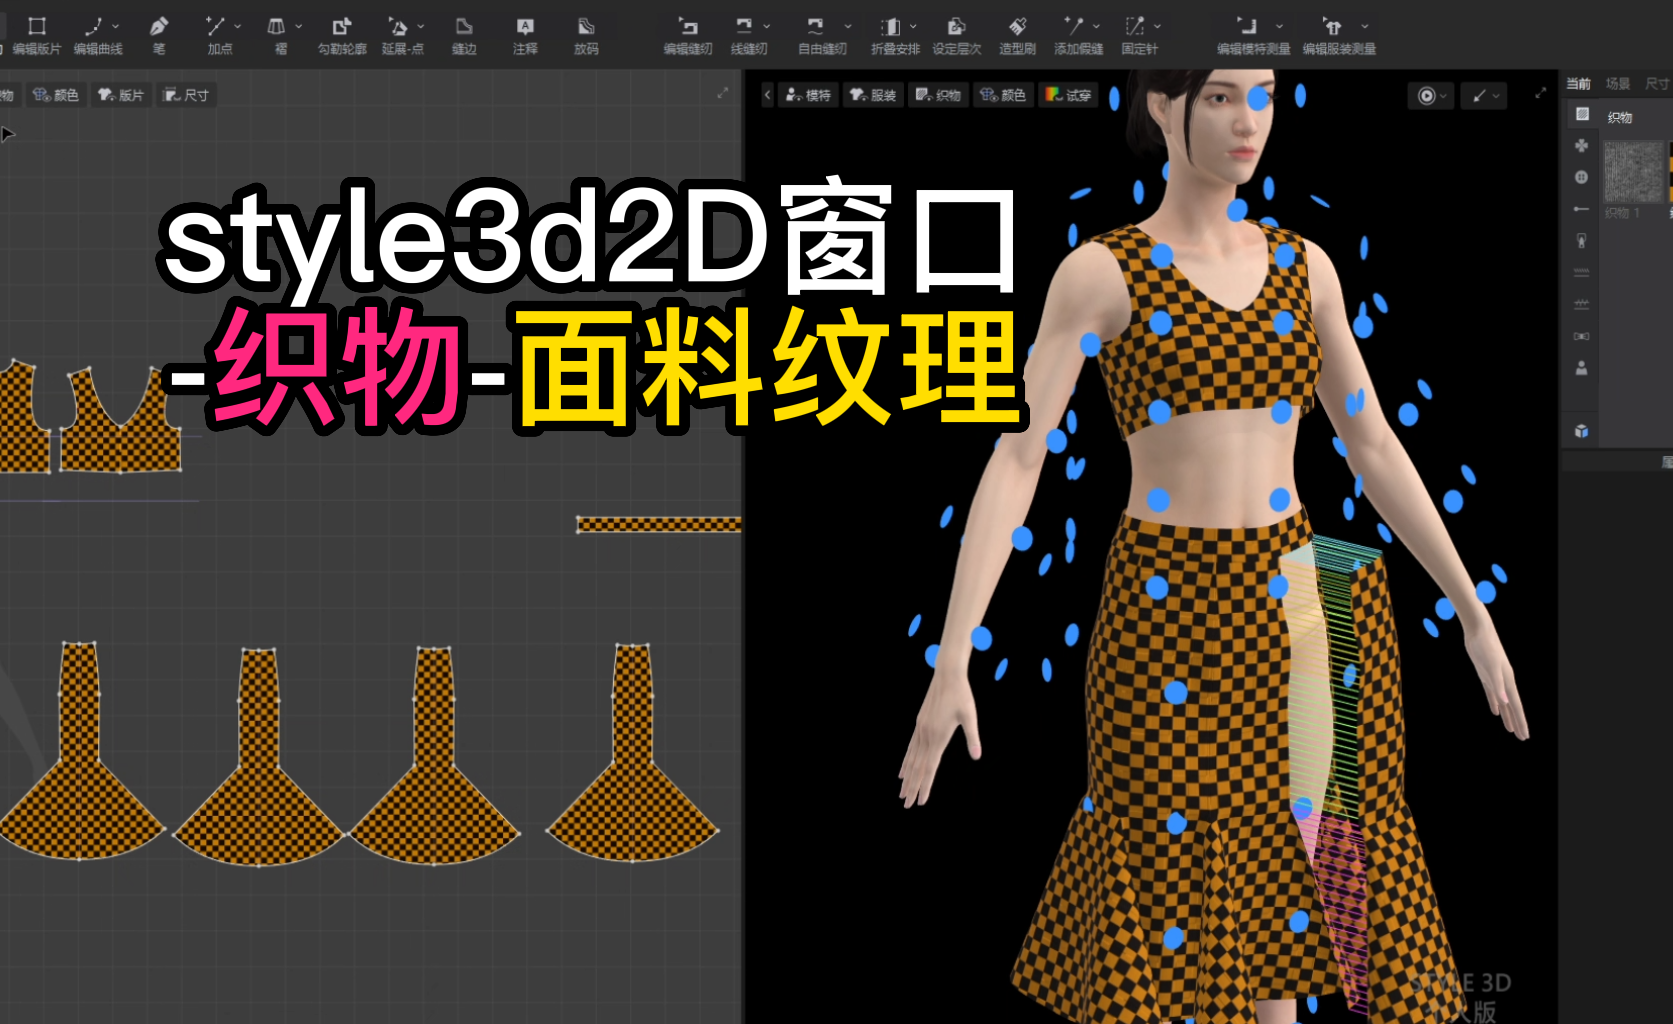 21-style3d2D窗口-织物-面料纹理.png